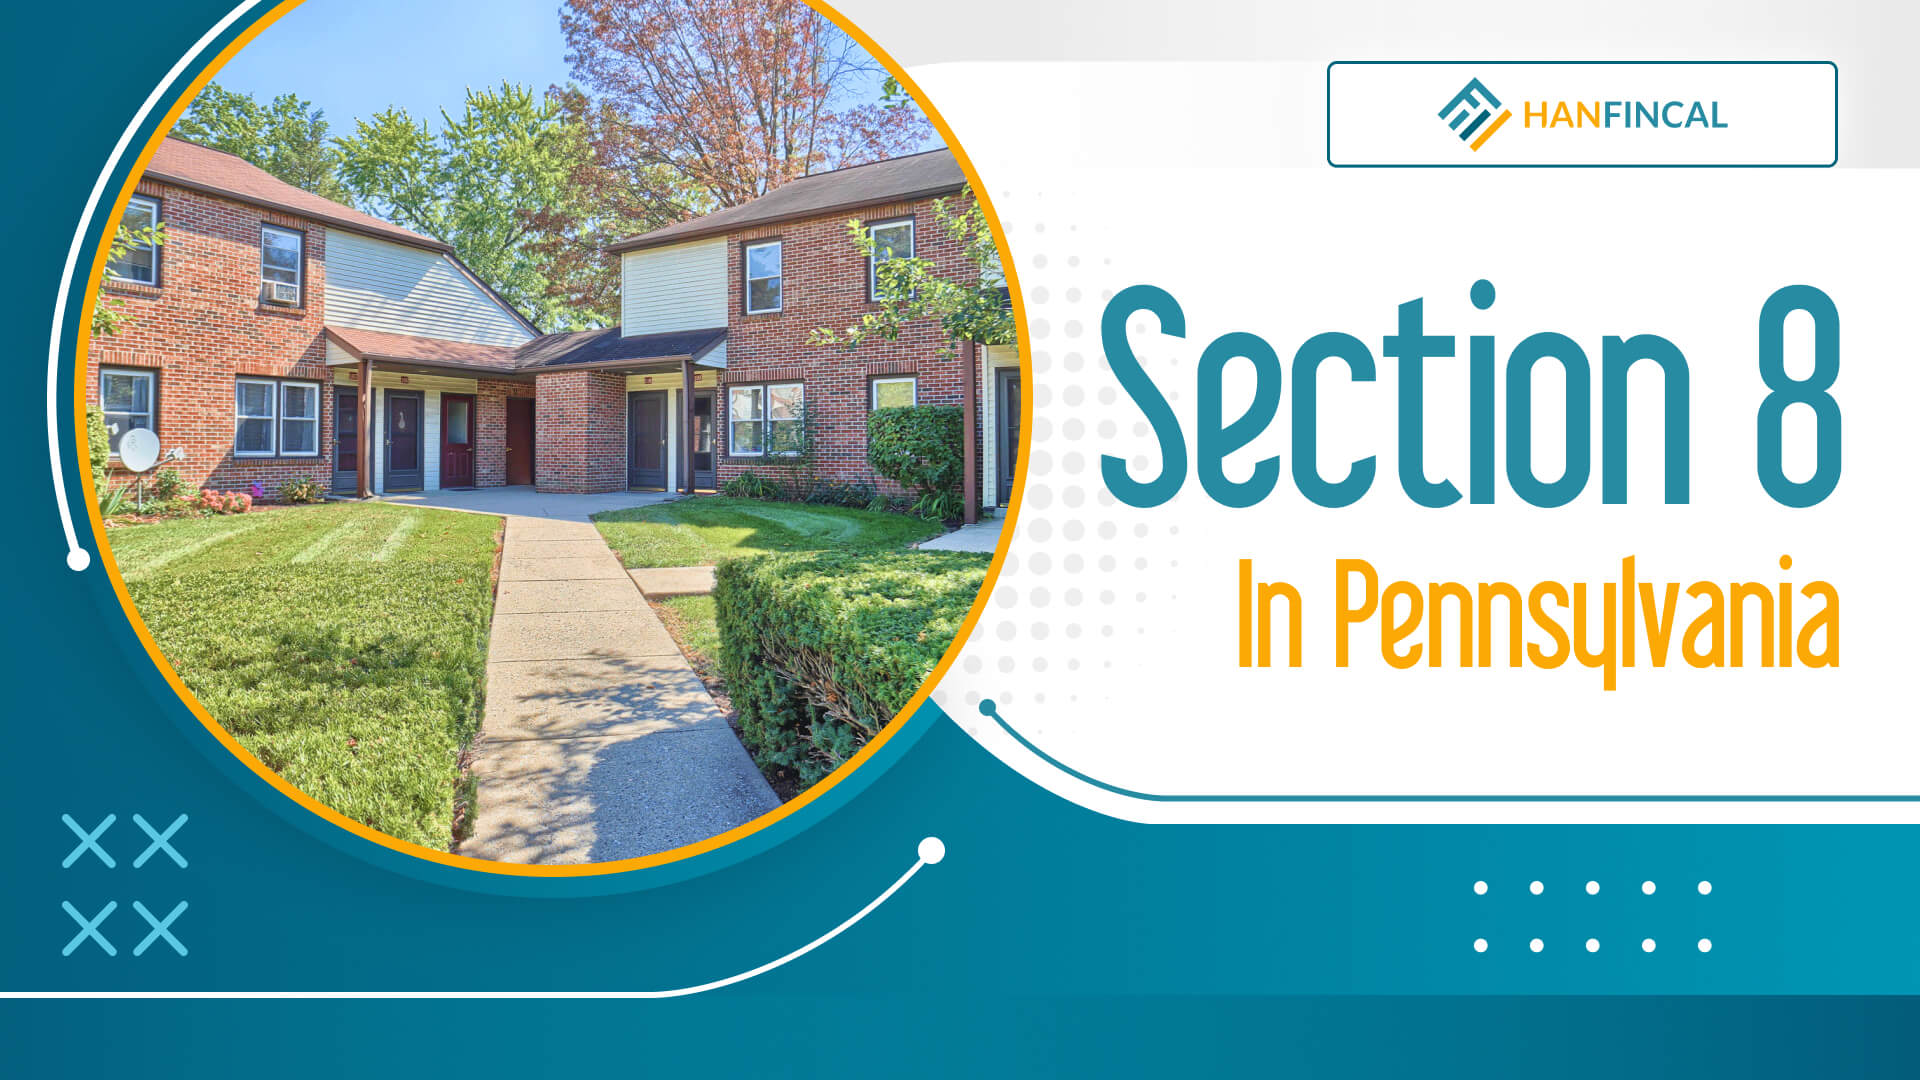 pennsylvania-section-8-how-to-apply-02-2023-hanfincal